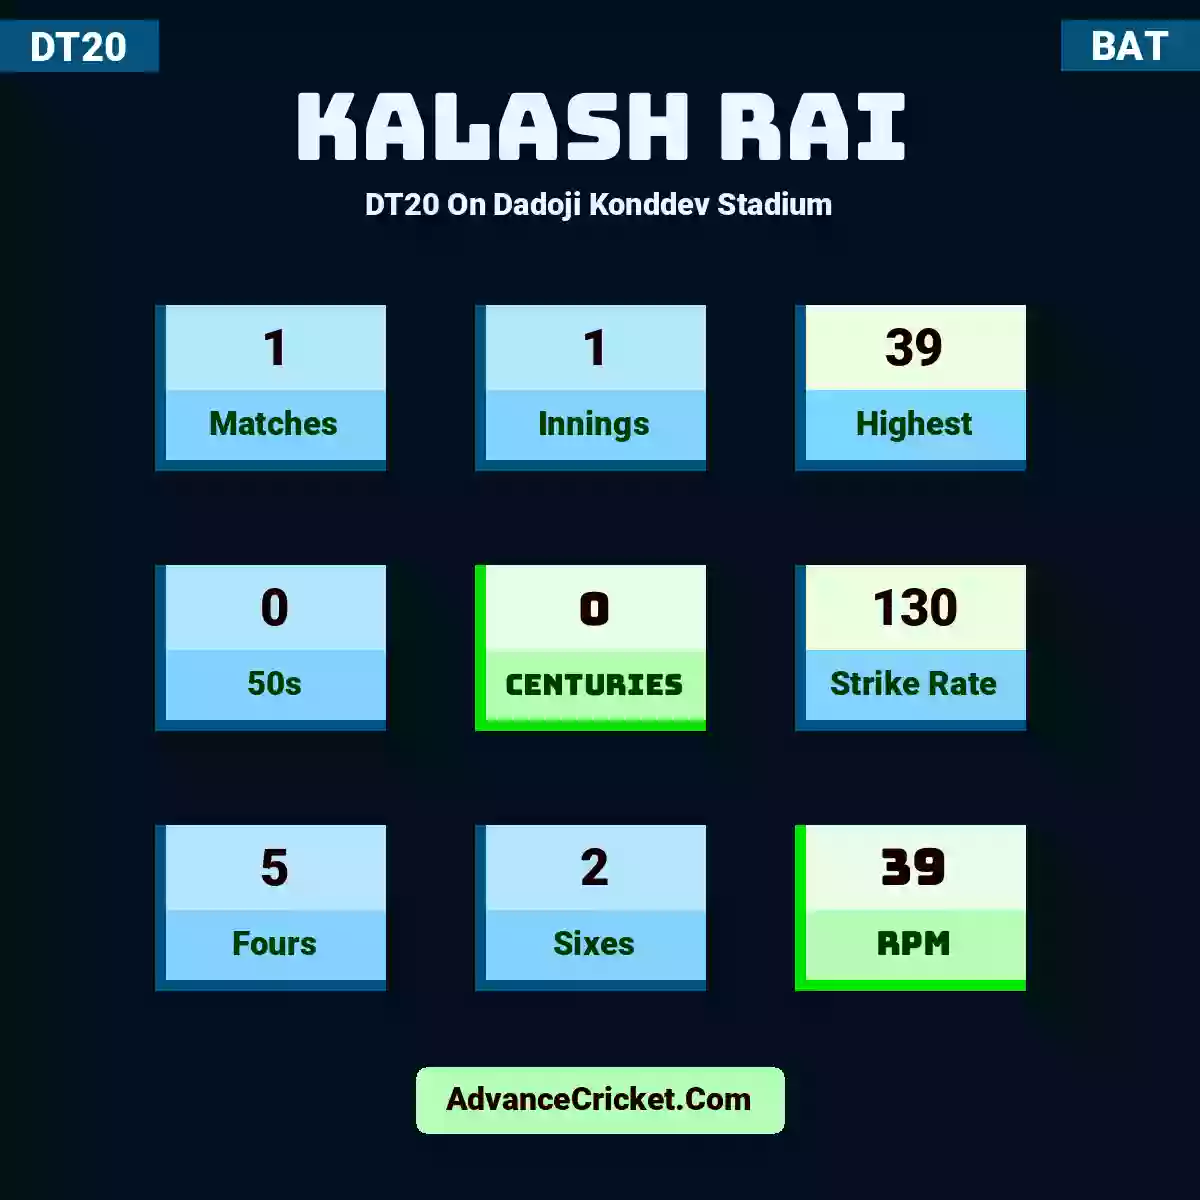 Kalash Rai DT20  On Dadoji Konddev Stadium, Kalash Rai played 1 matches, scored 39 runs as highest, 0 half-centuries, and 0 centuries, with a strike rate of 130. K.Rai hit 5 fours and 2 sixes, with an RPM of 39.